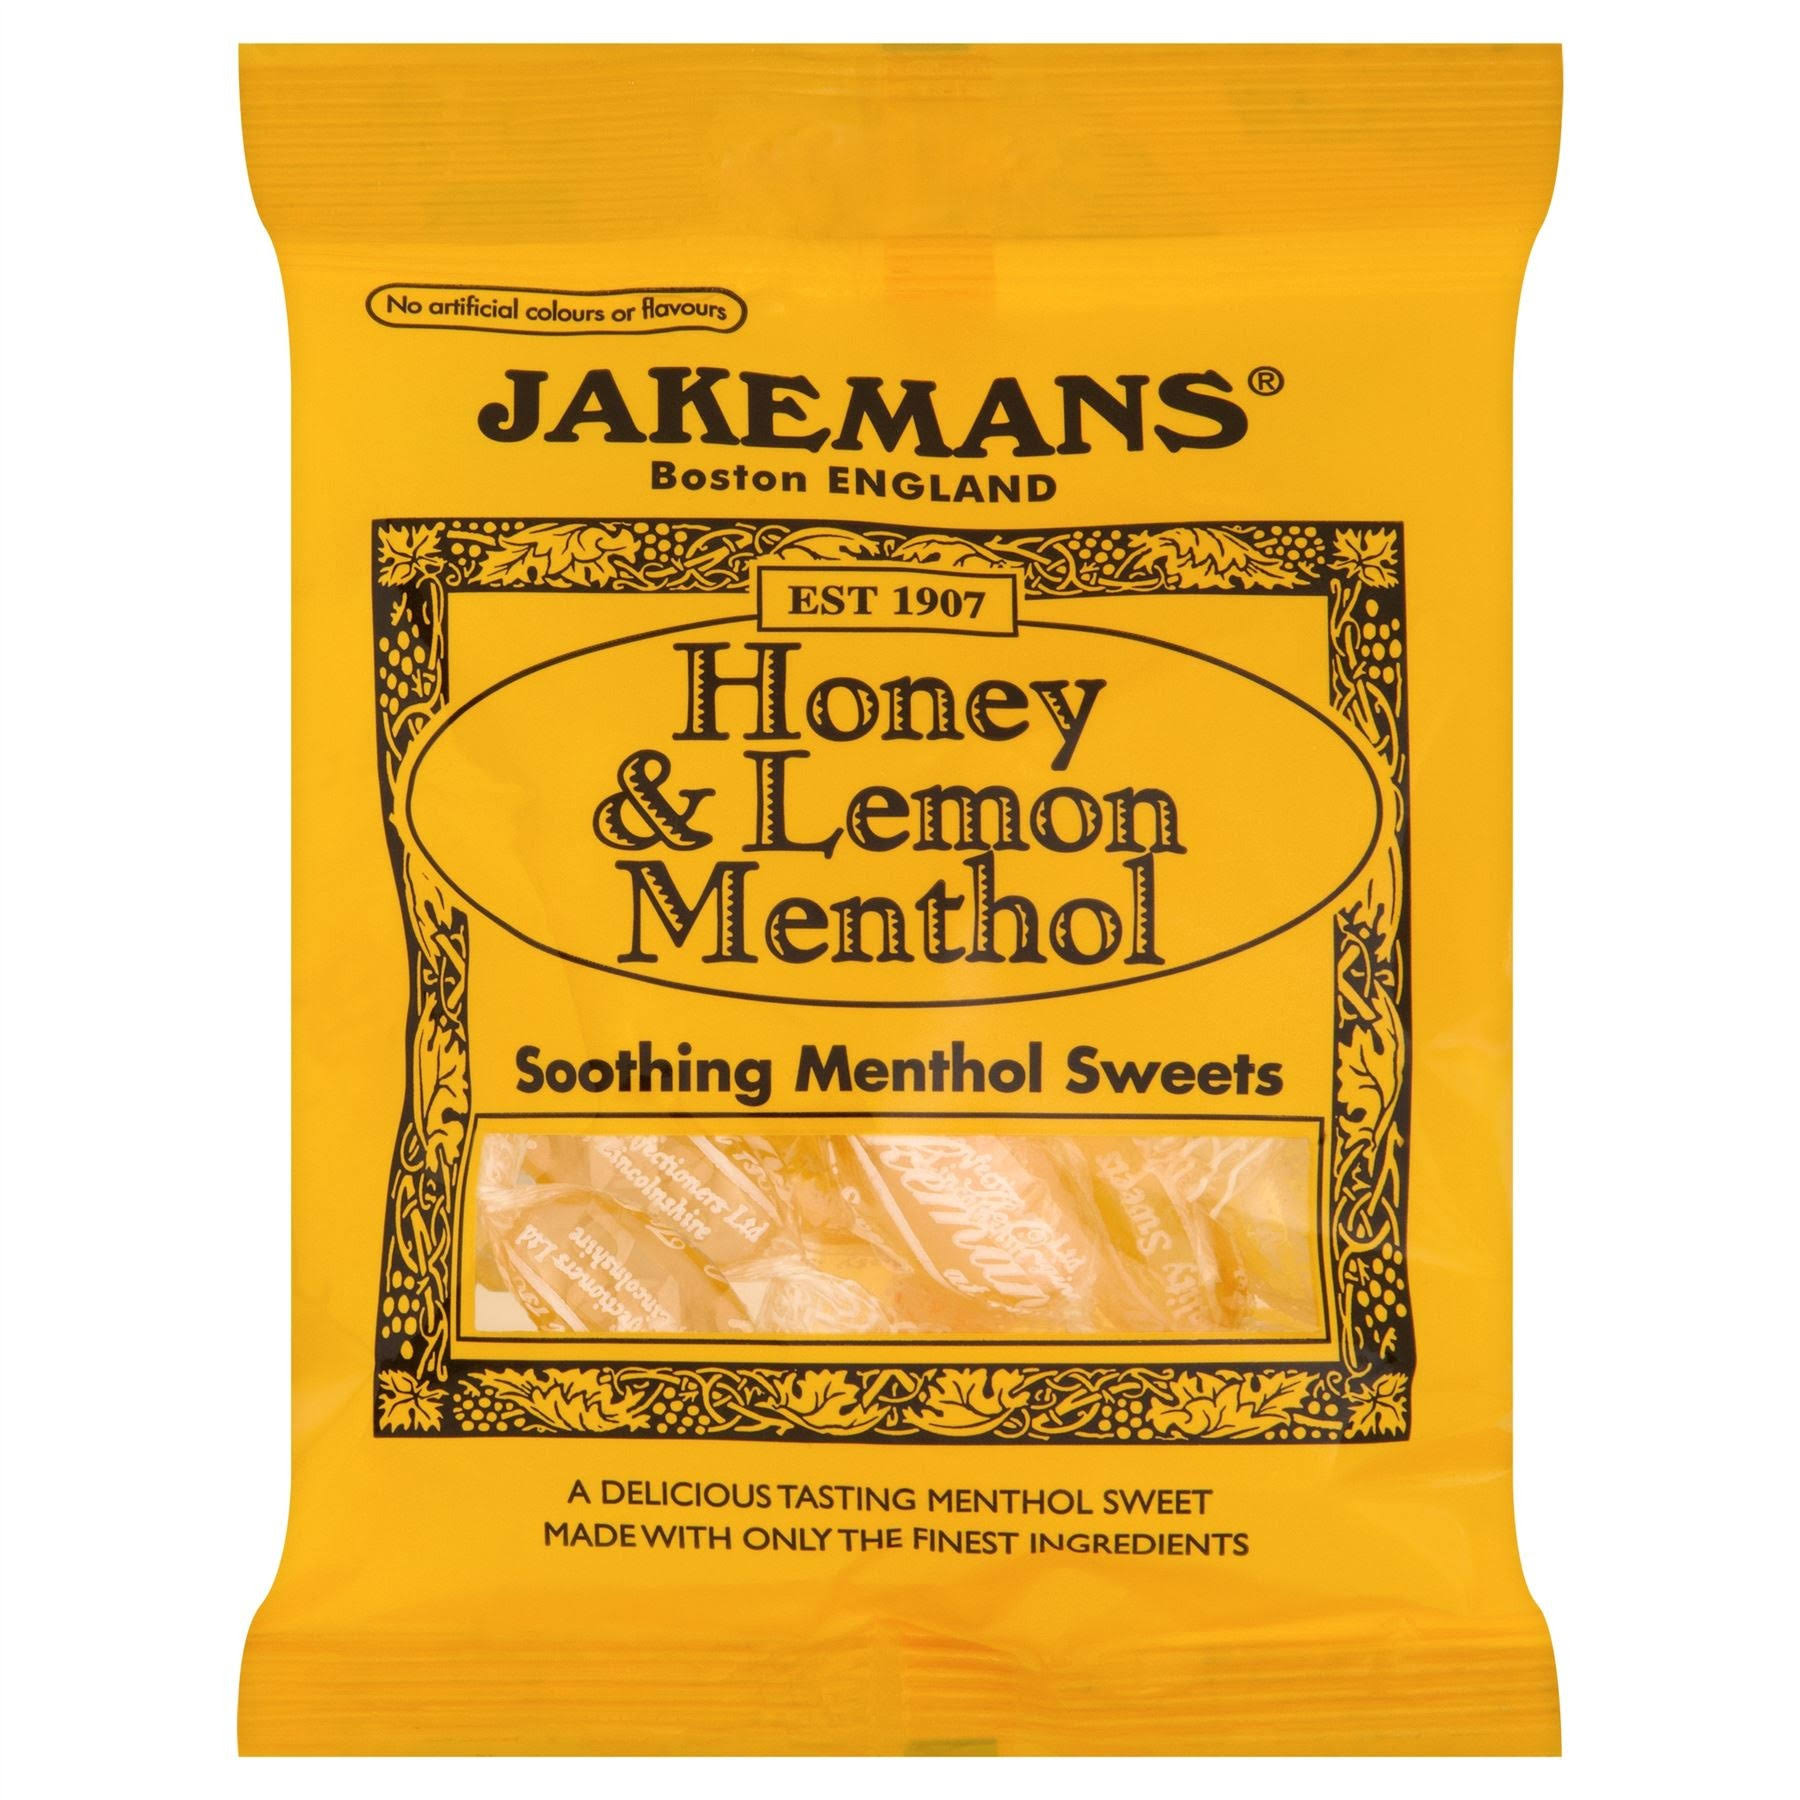 Jakemans Soothing Menthol Sweets - Honey and Lemon Menthol, 100g